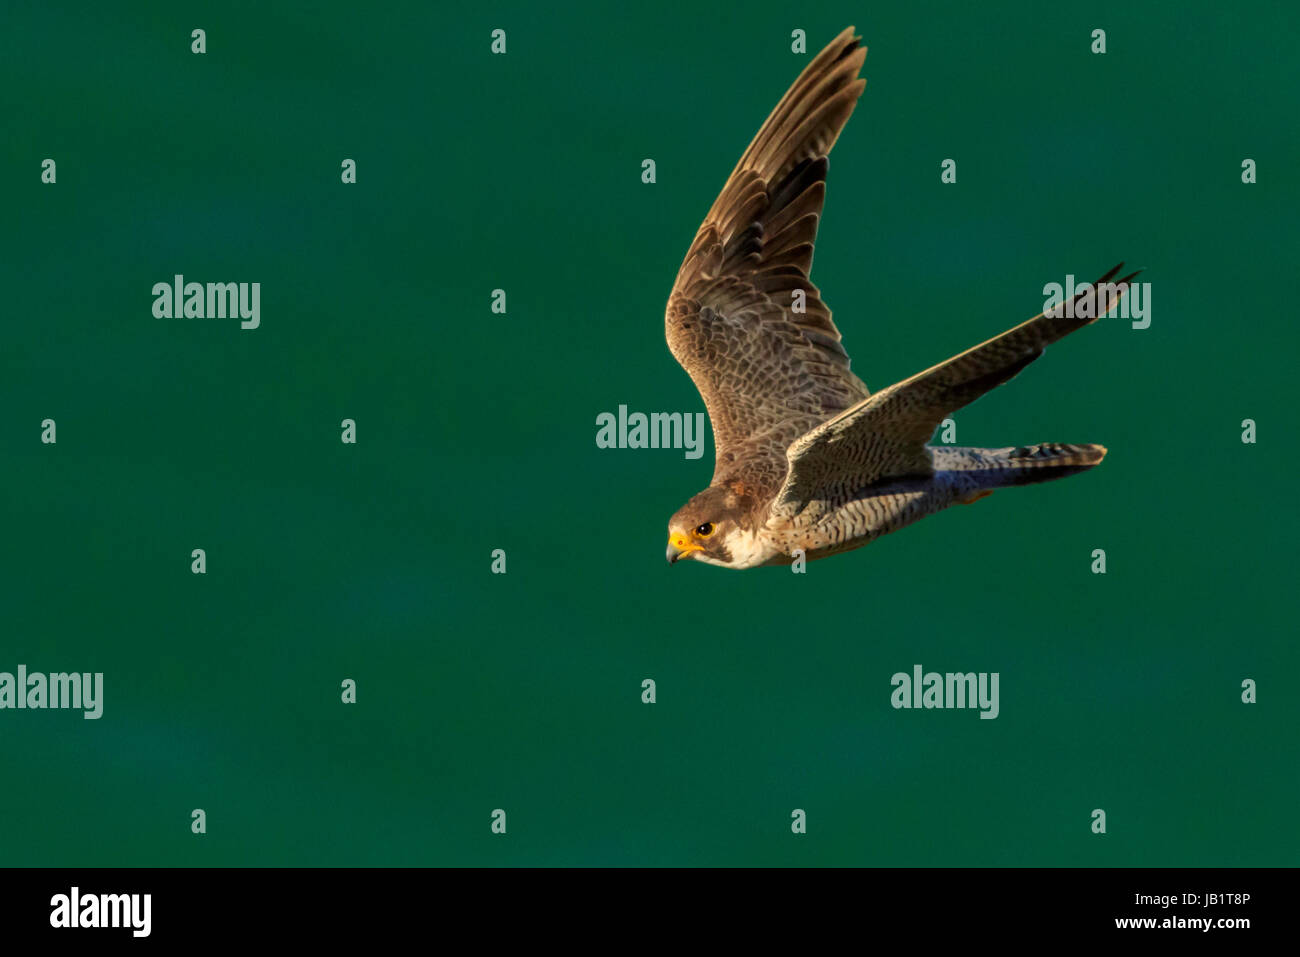 Adult Peregrine falcon (Falco peregrinus) flying over the green sea Stock Photo